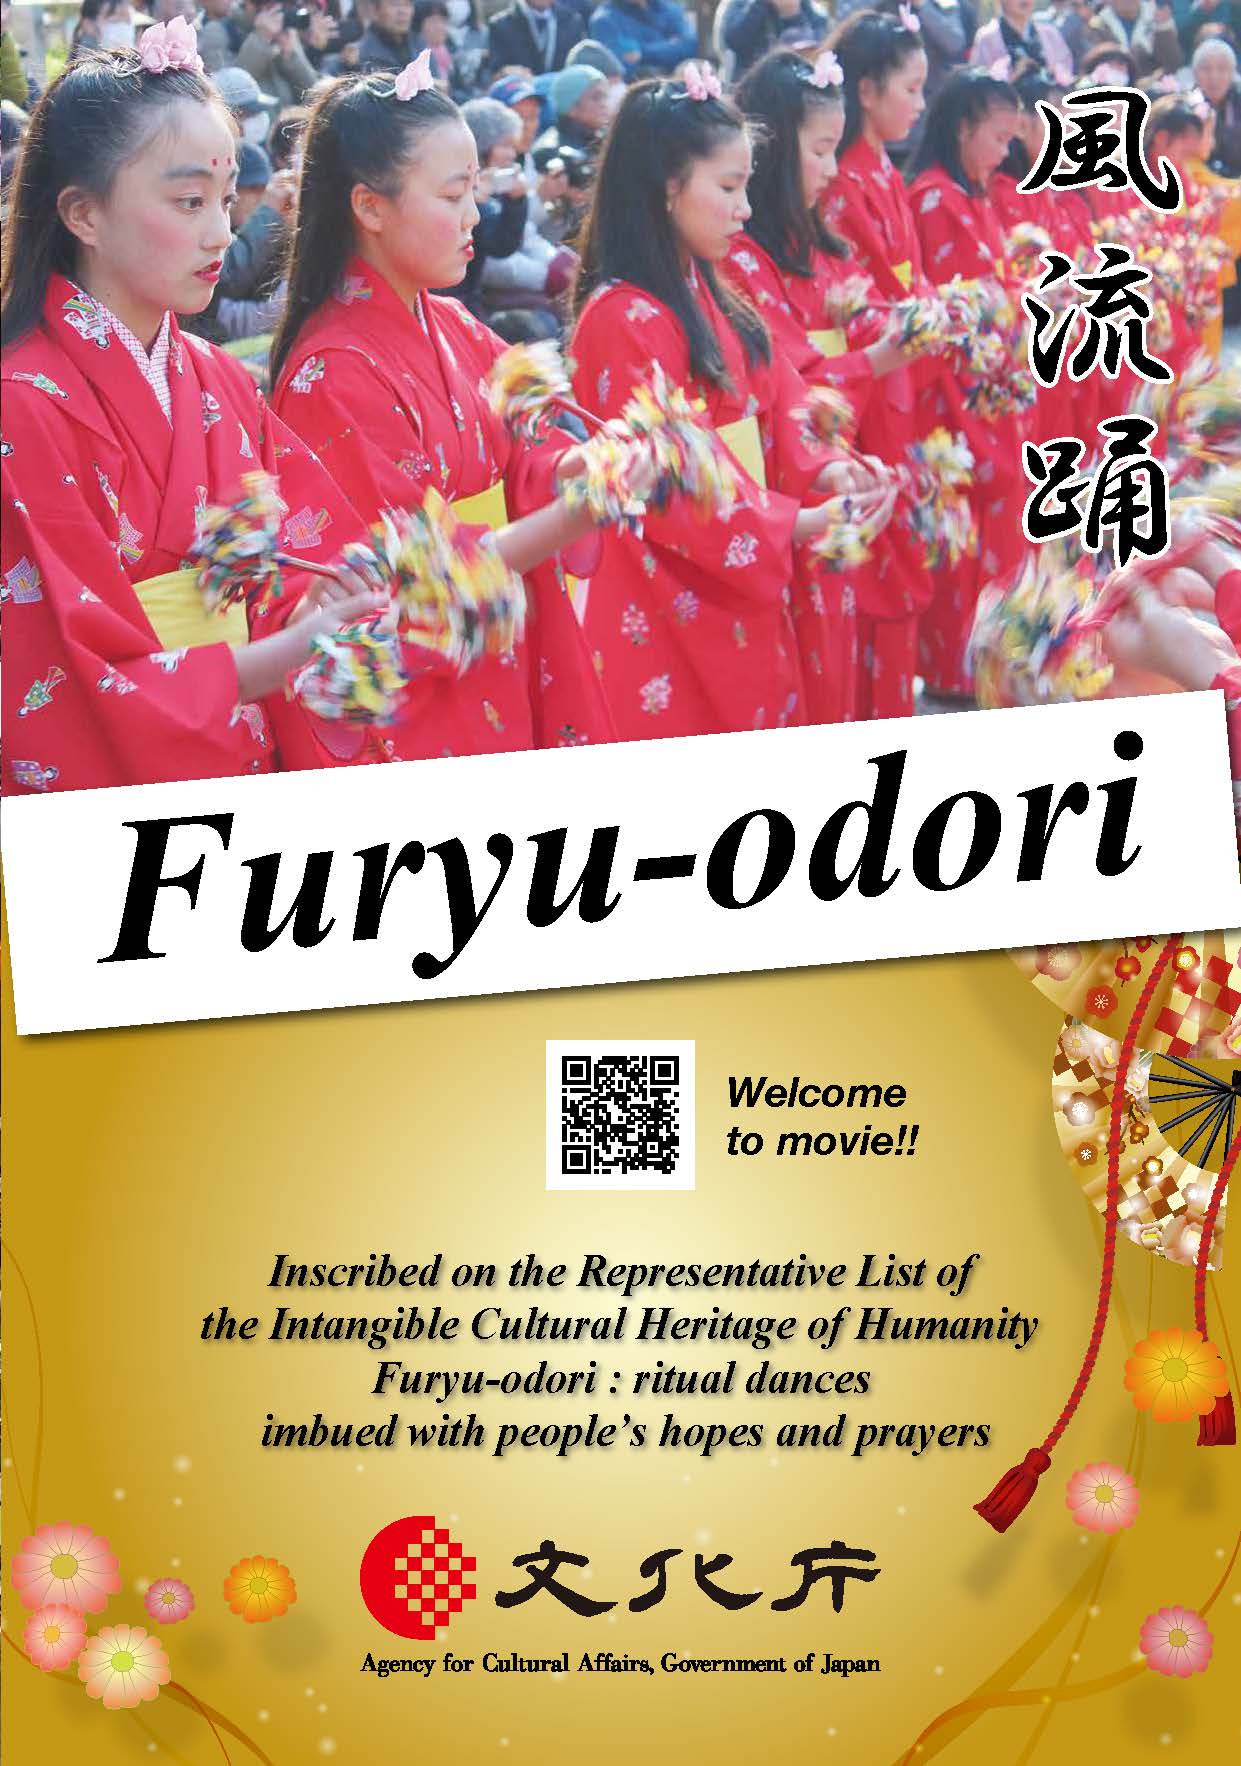 Furyu-odori, ritual dances imbued with people’s hopes and prayers